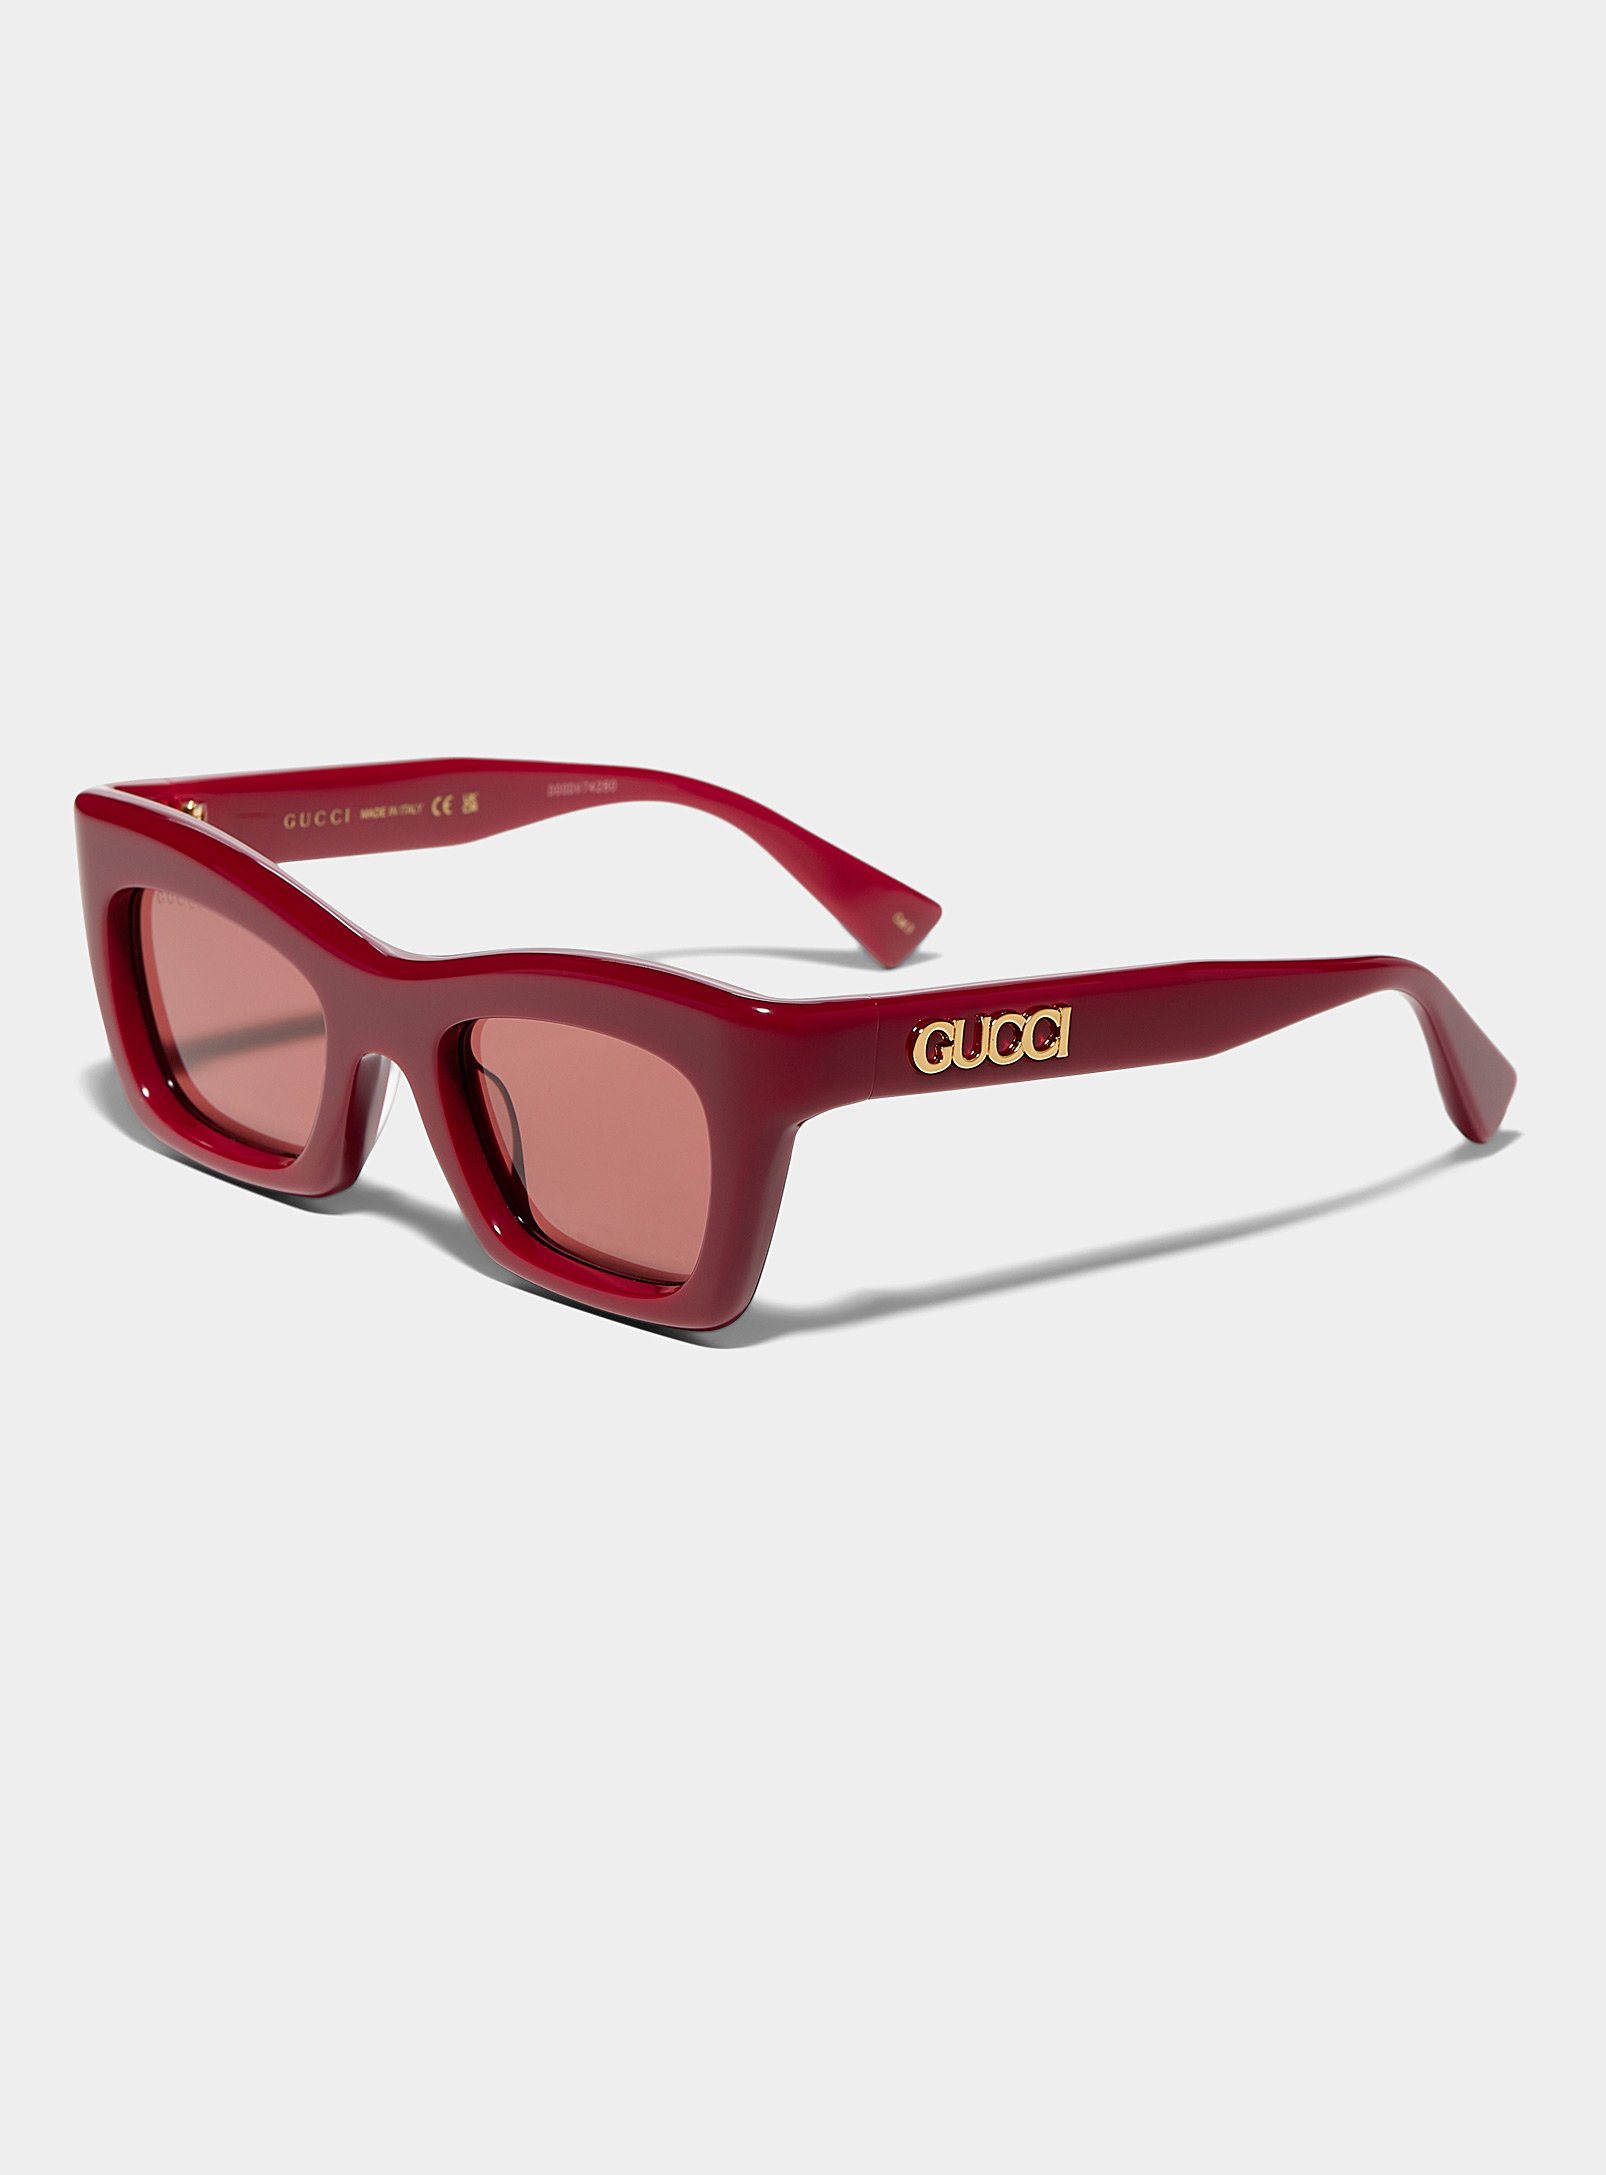 Gucci Burgundy Cat-eye Sunglasses